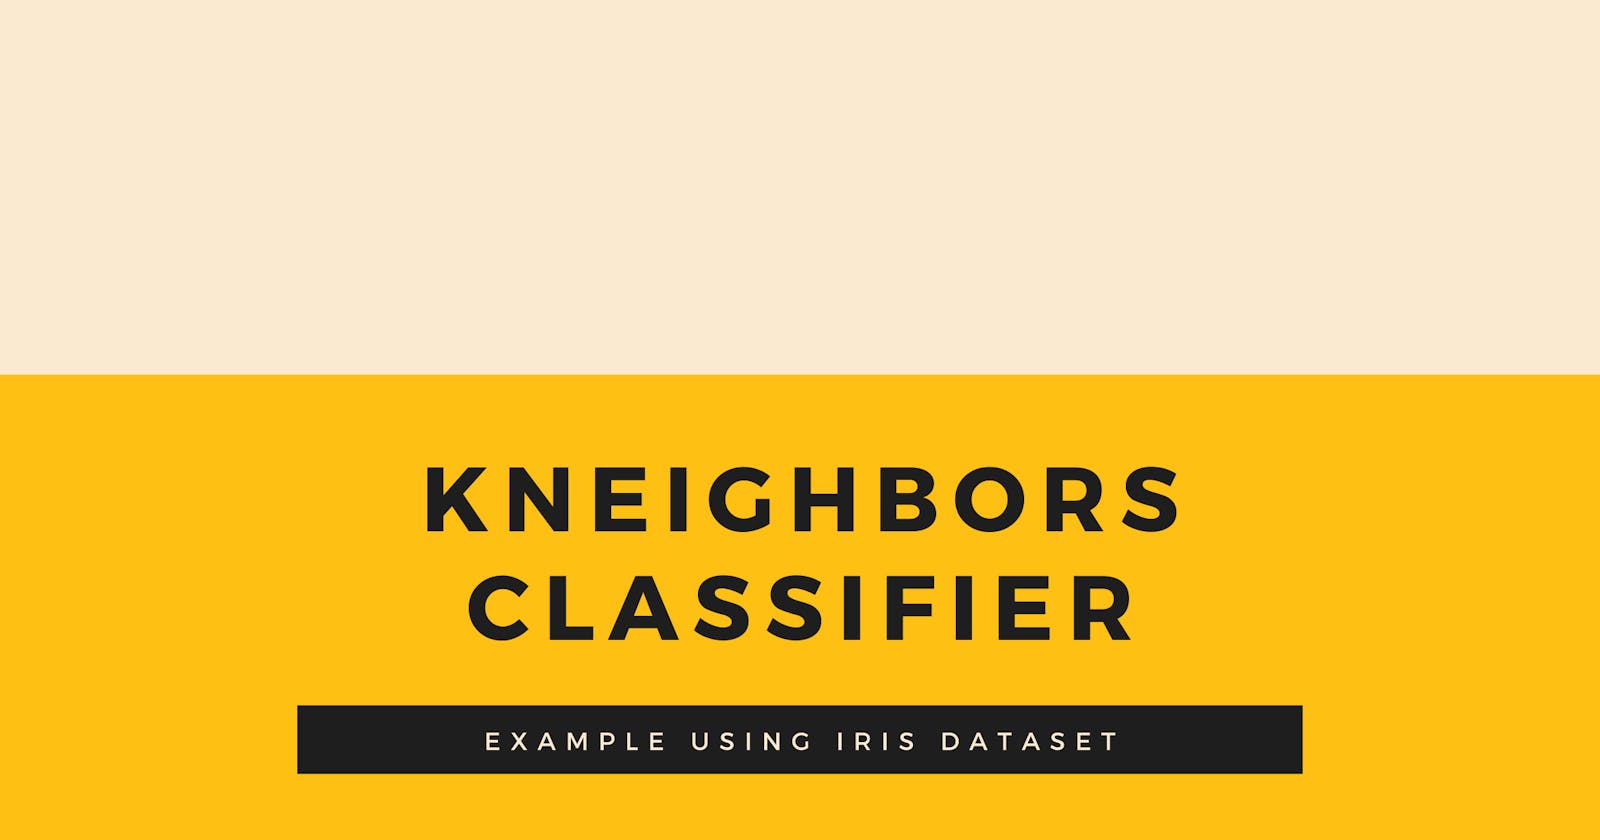 KNeighbors classifier on Iris dataset